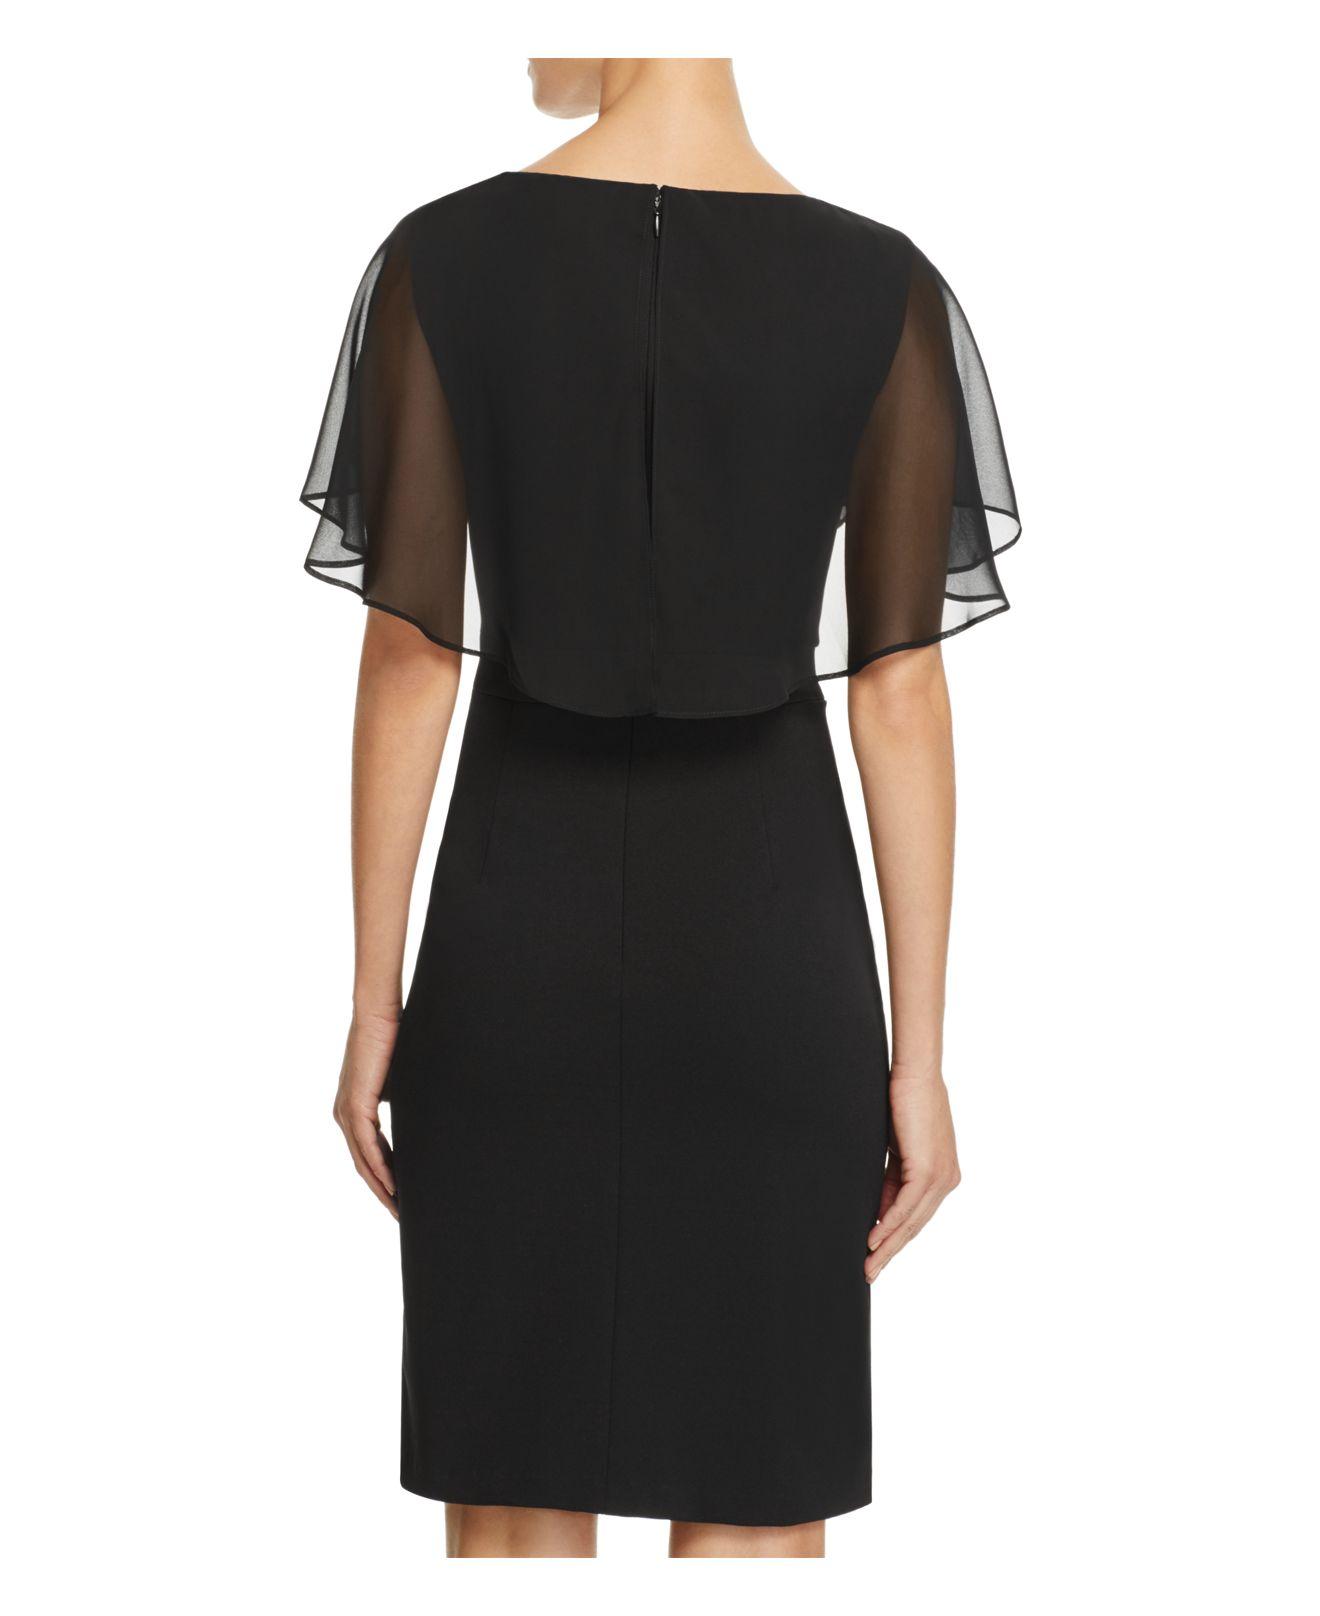 Lyst - Adrianna Papell Cape-overlay Sheath Dress in Black